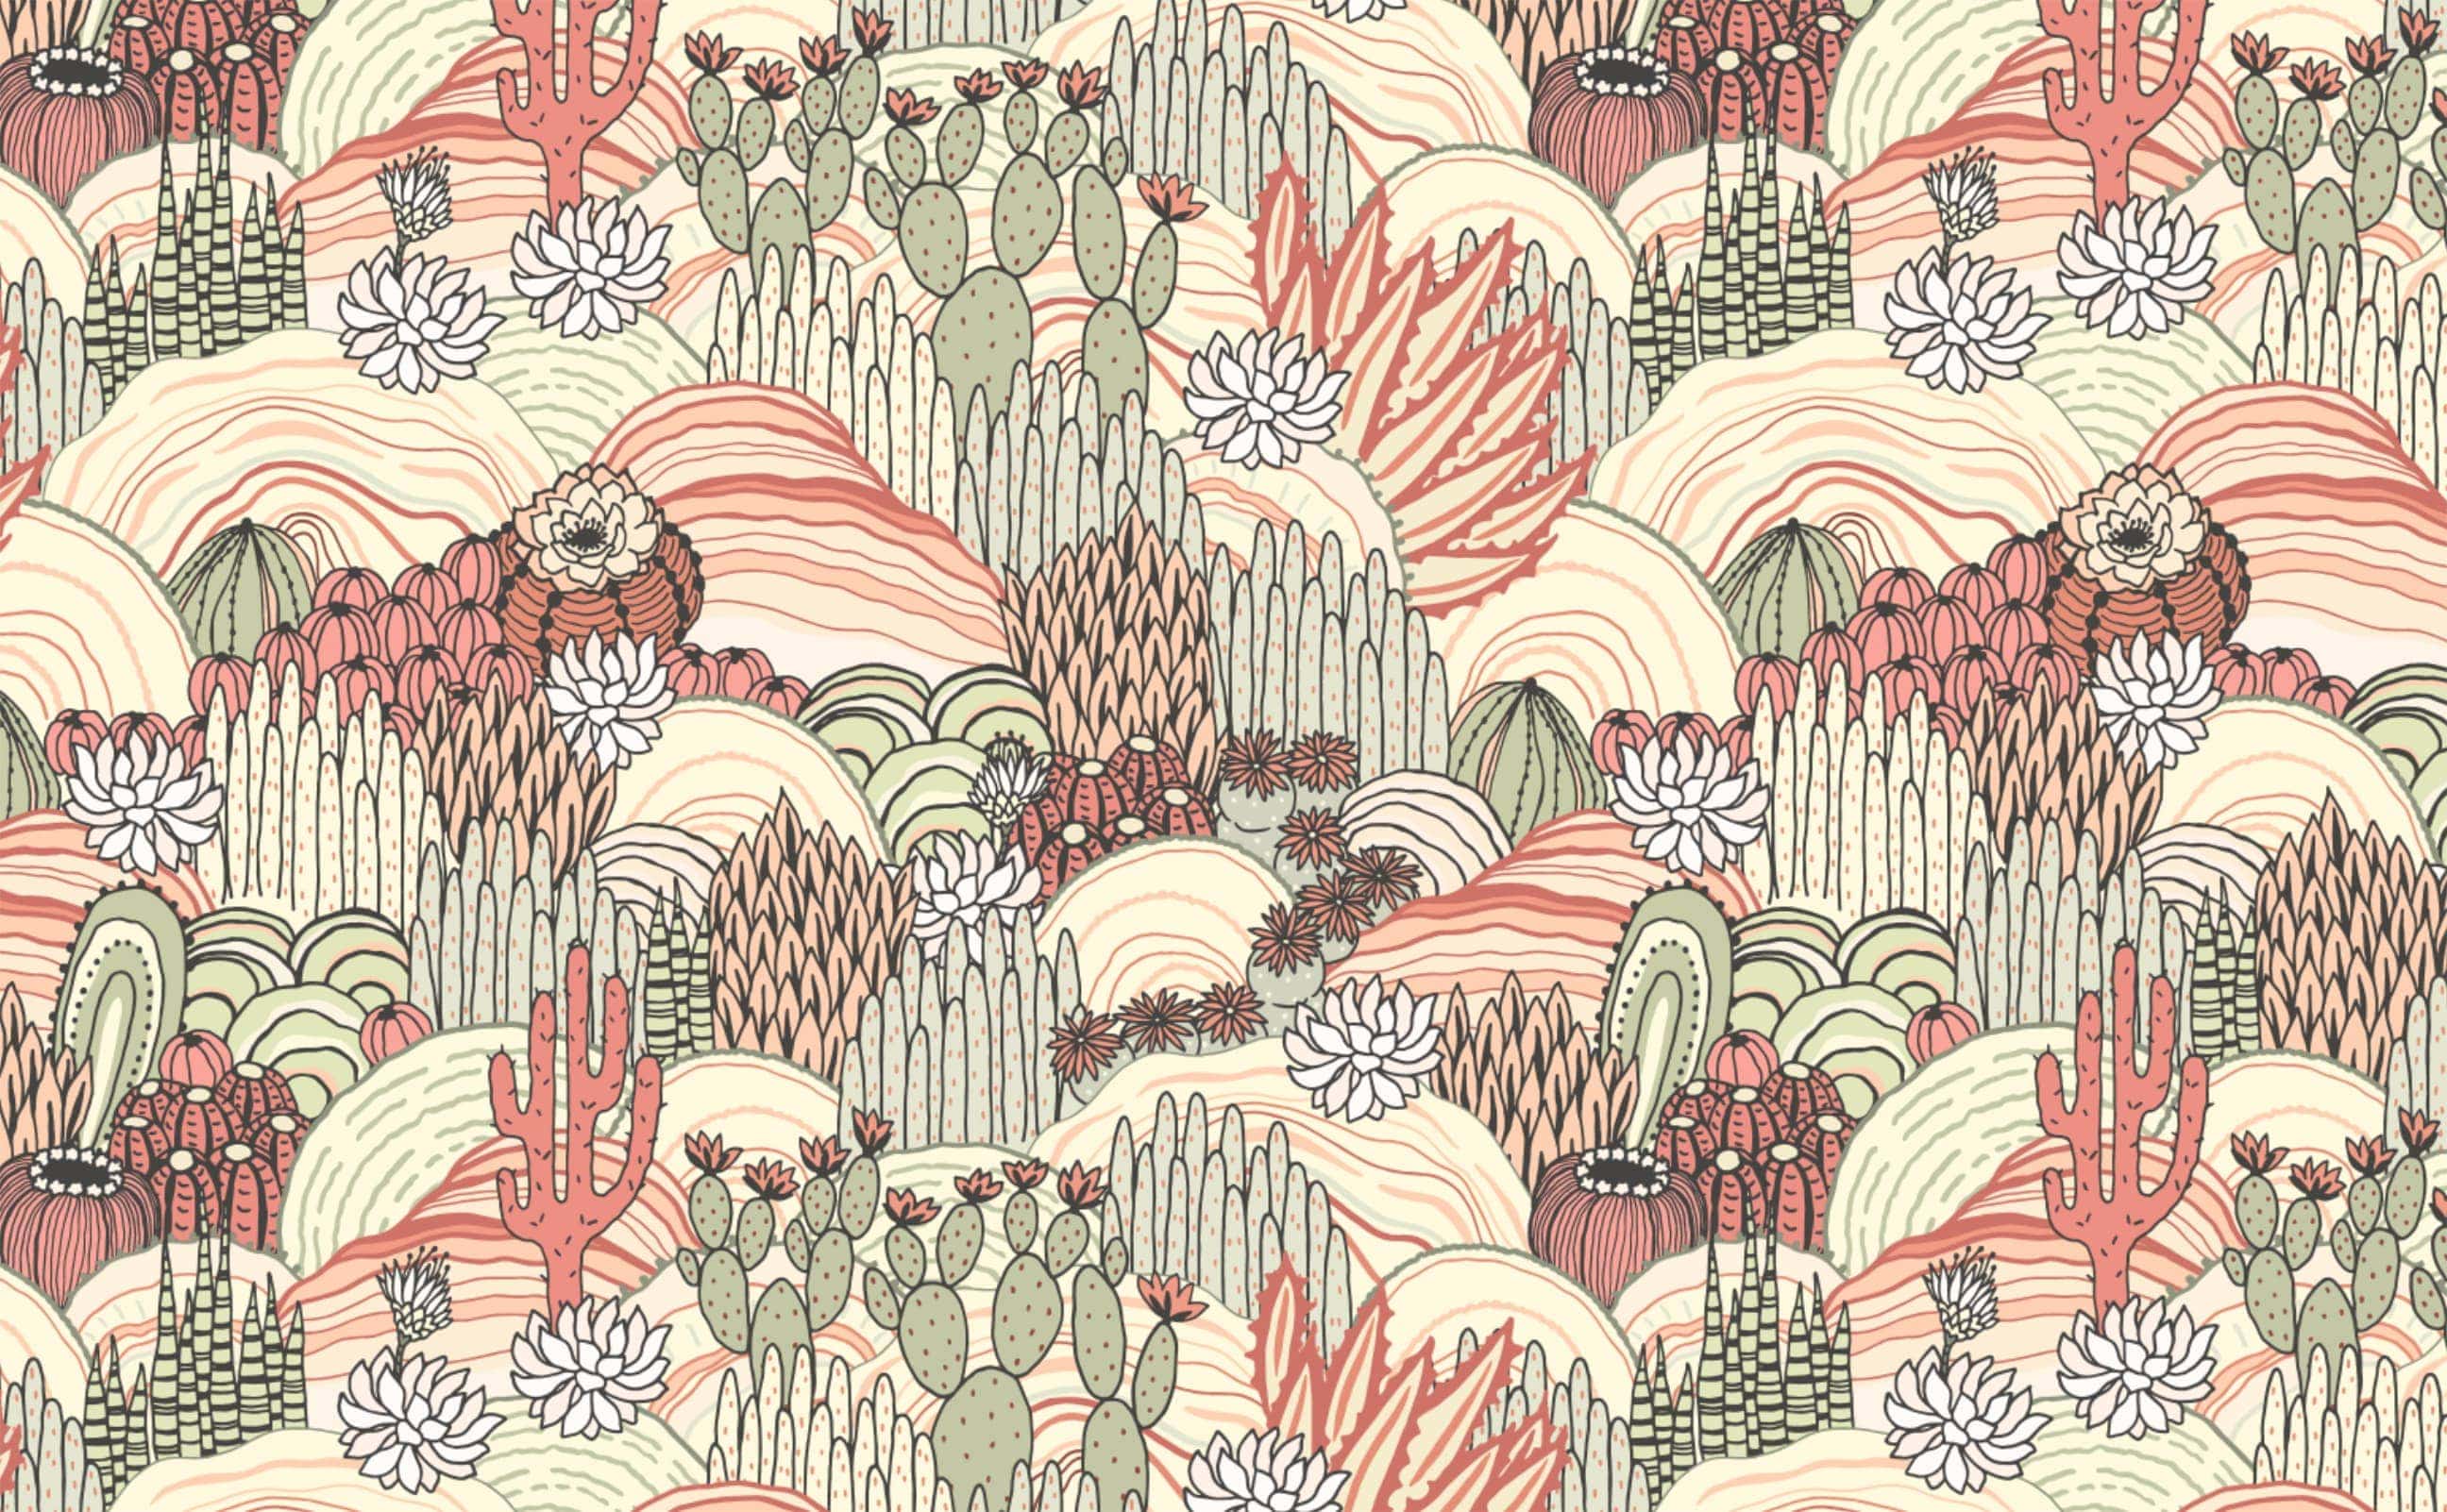 Rose and sage tone illustrated desert landscape cactus wallpaper